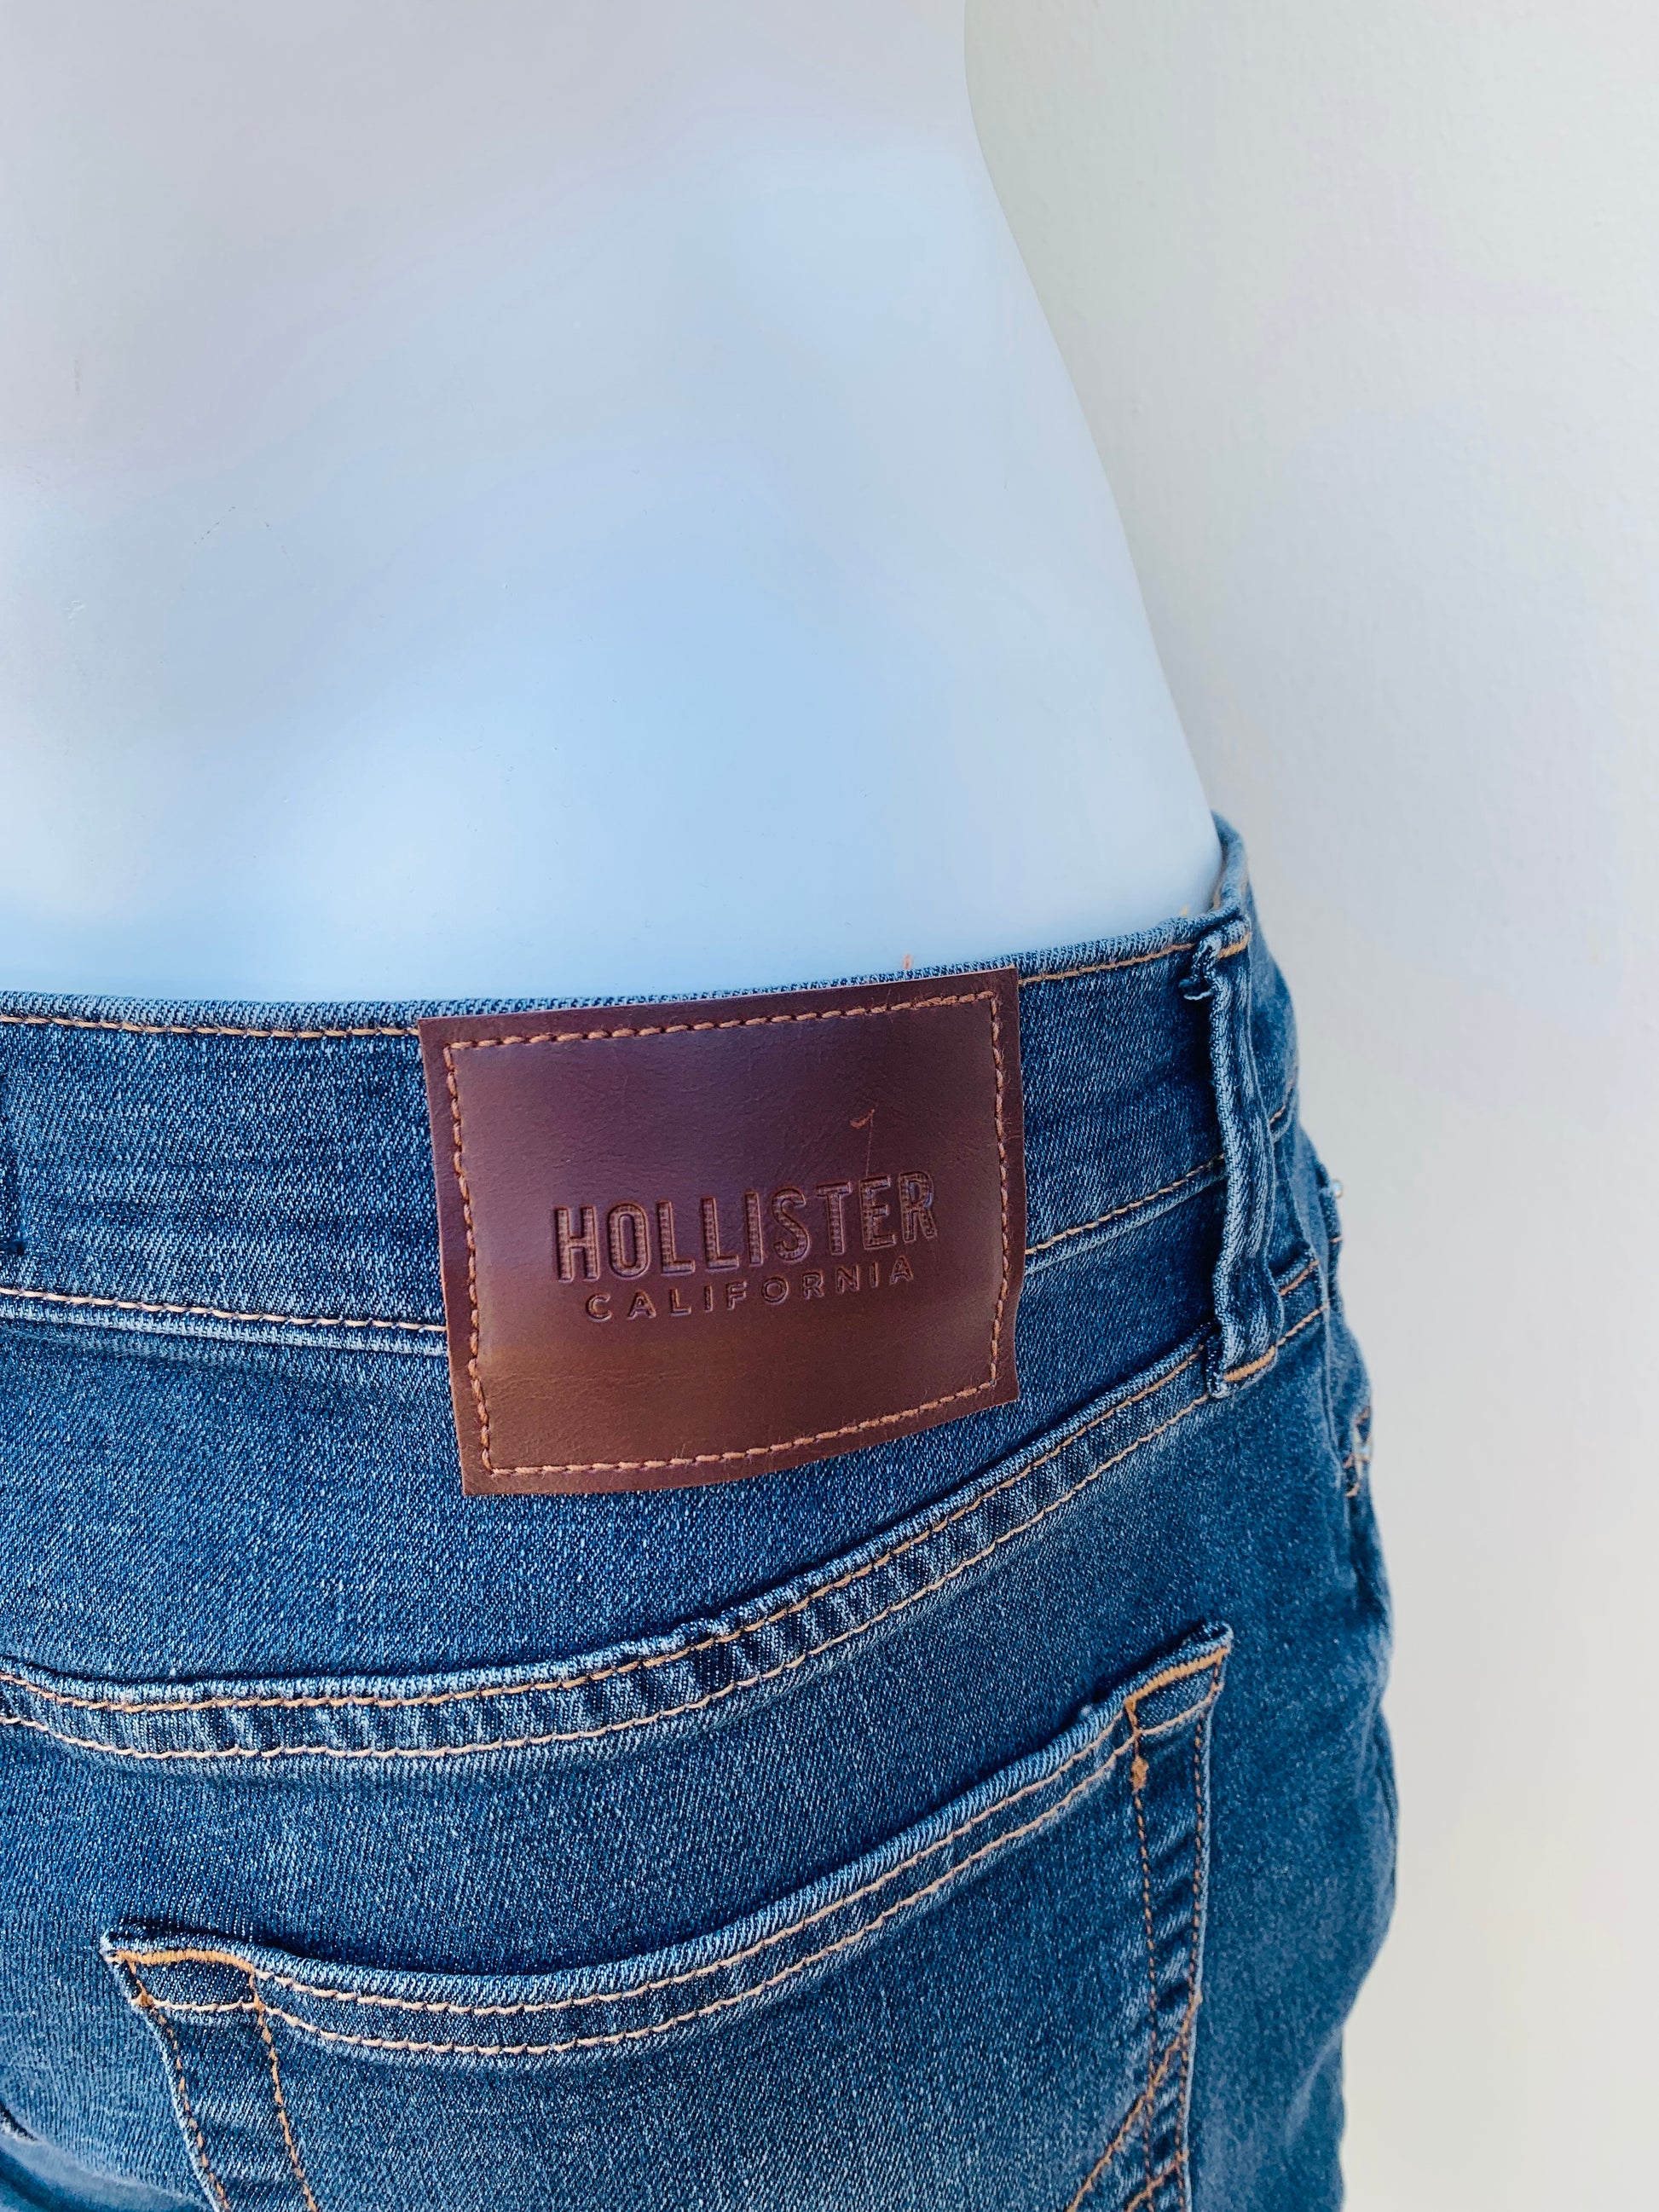 Pantalon jeans Hollister original azul claro con rasgados al frente y –  Qlindo Store